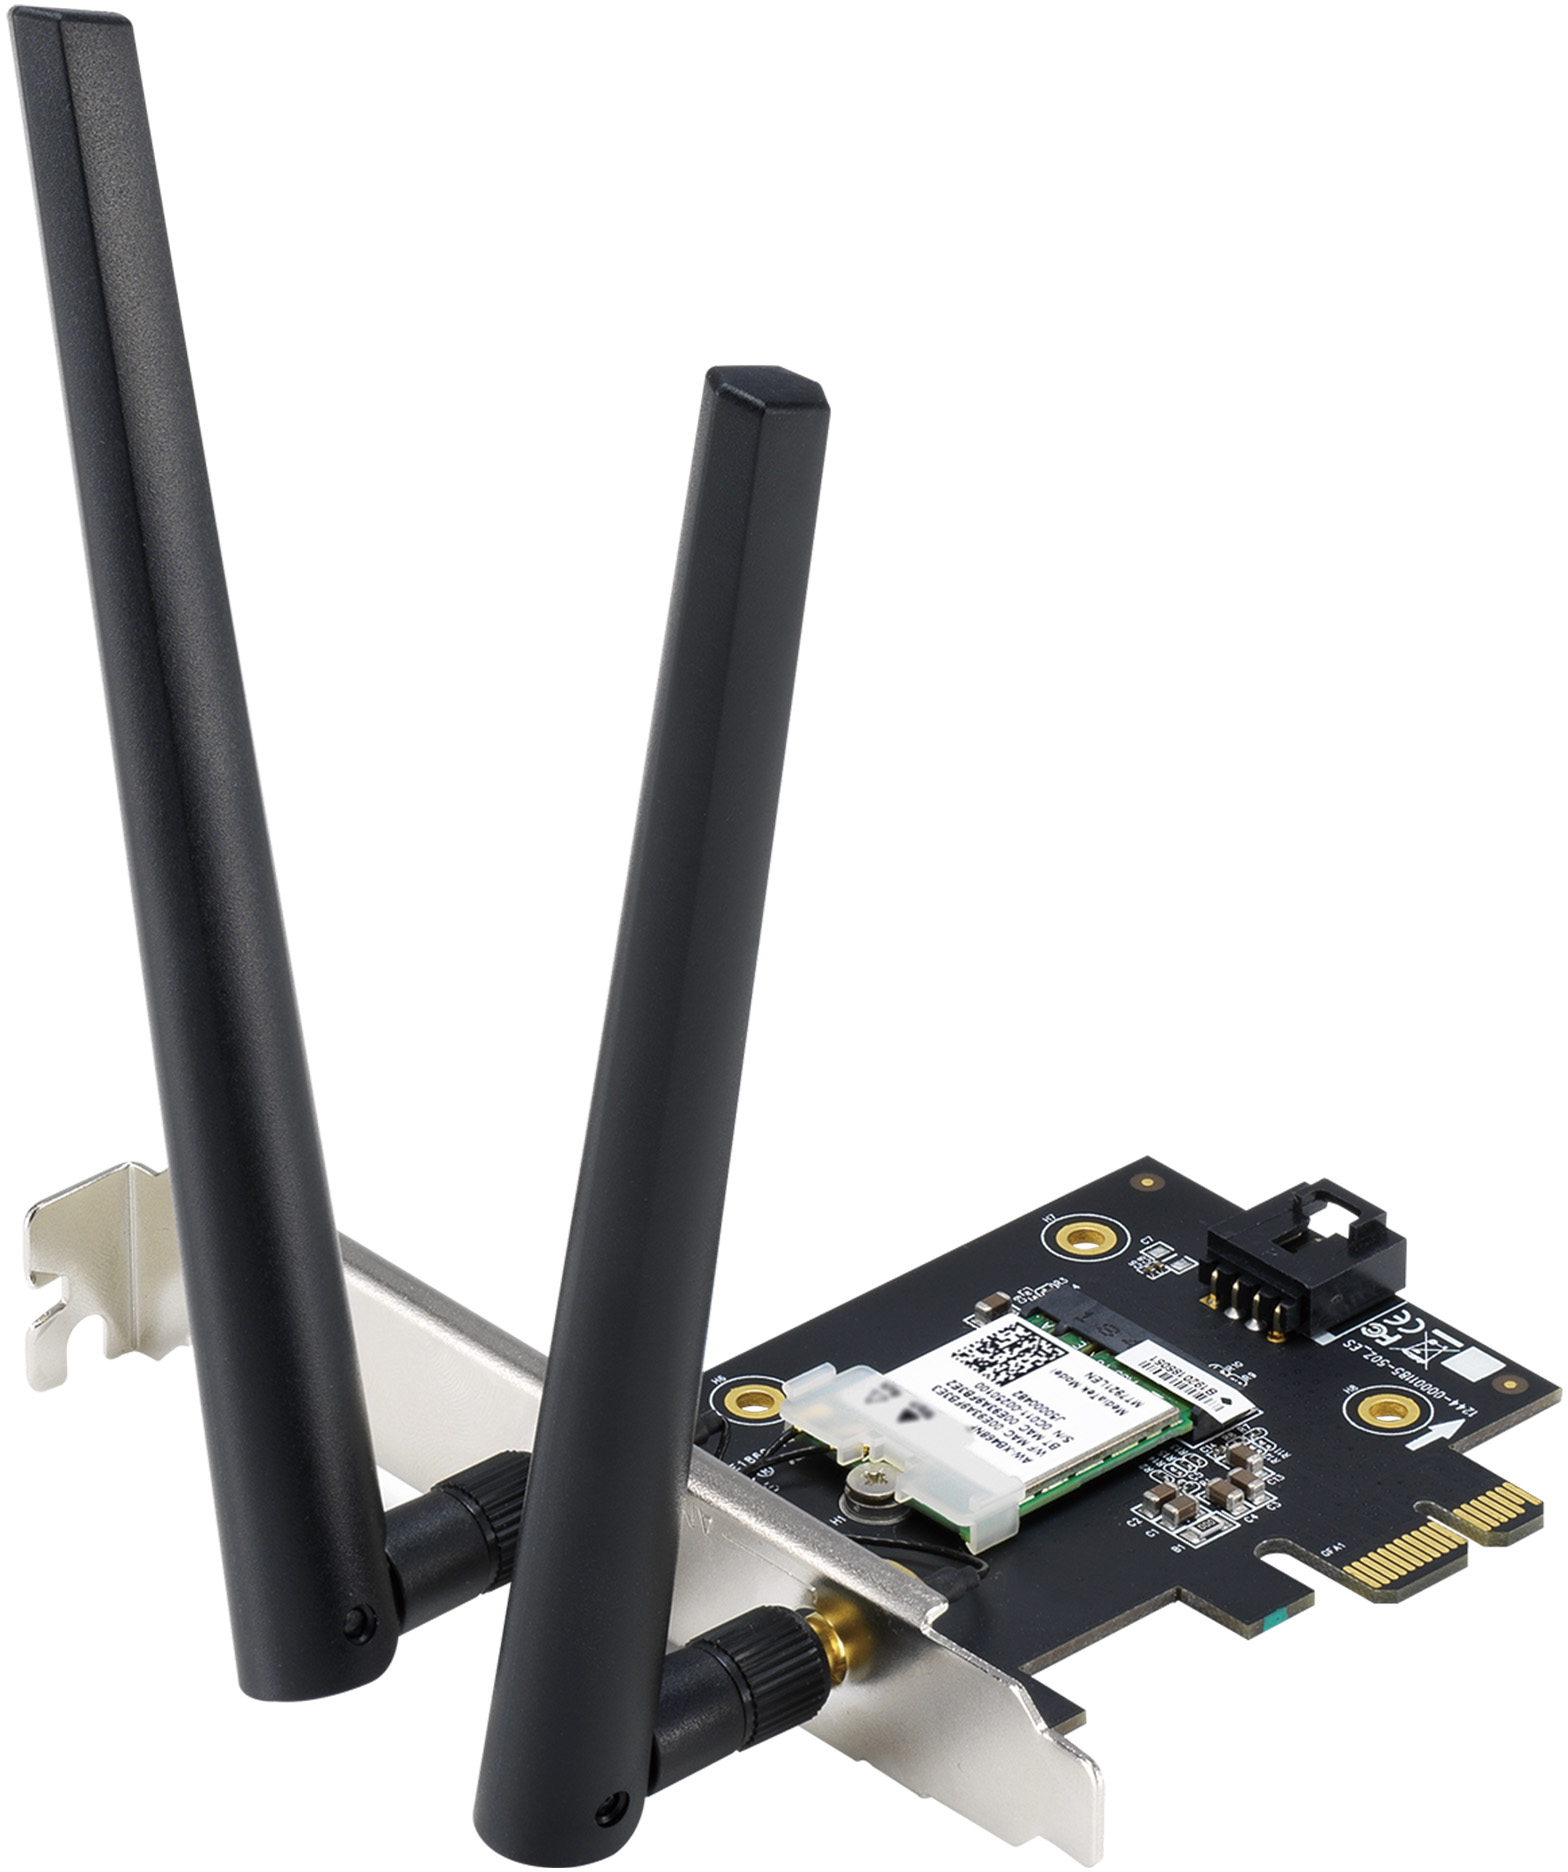 WiFi 6E AX210NGW Card AXE5400 PCI-E Network Card Tri-Band BT5.2 Wireless  Gigabit 802.11ax ac 6GHz 5GHz 2.4GHz MU-MIMO for Desktop PC PCIe WiFi  Adapter